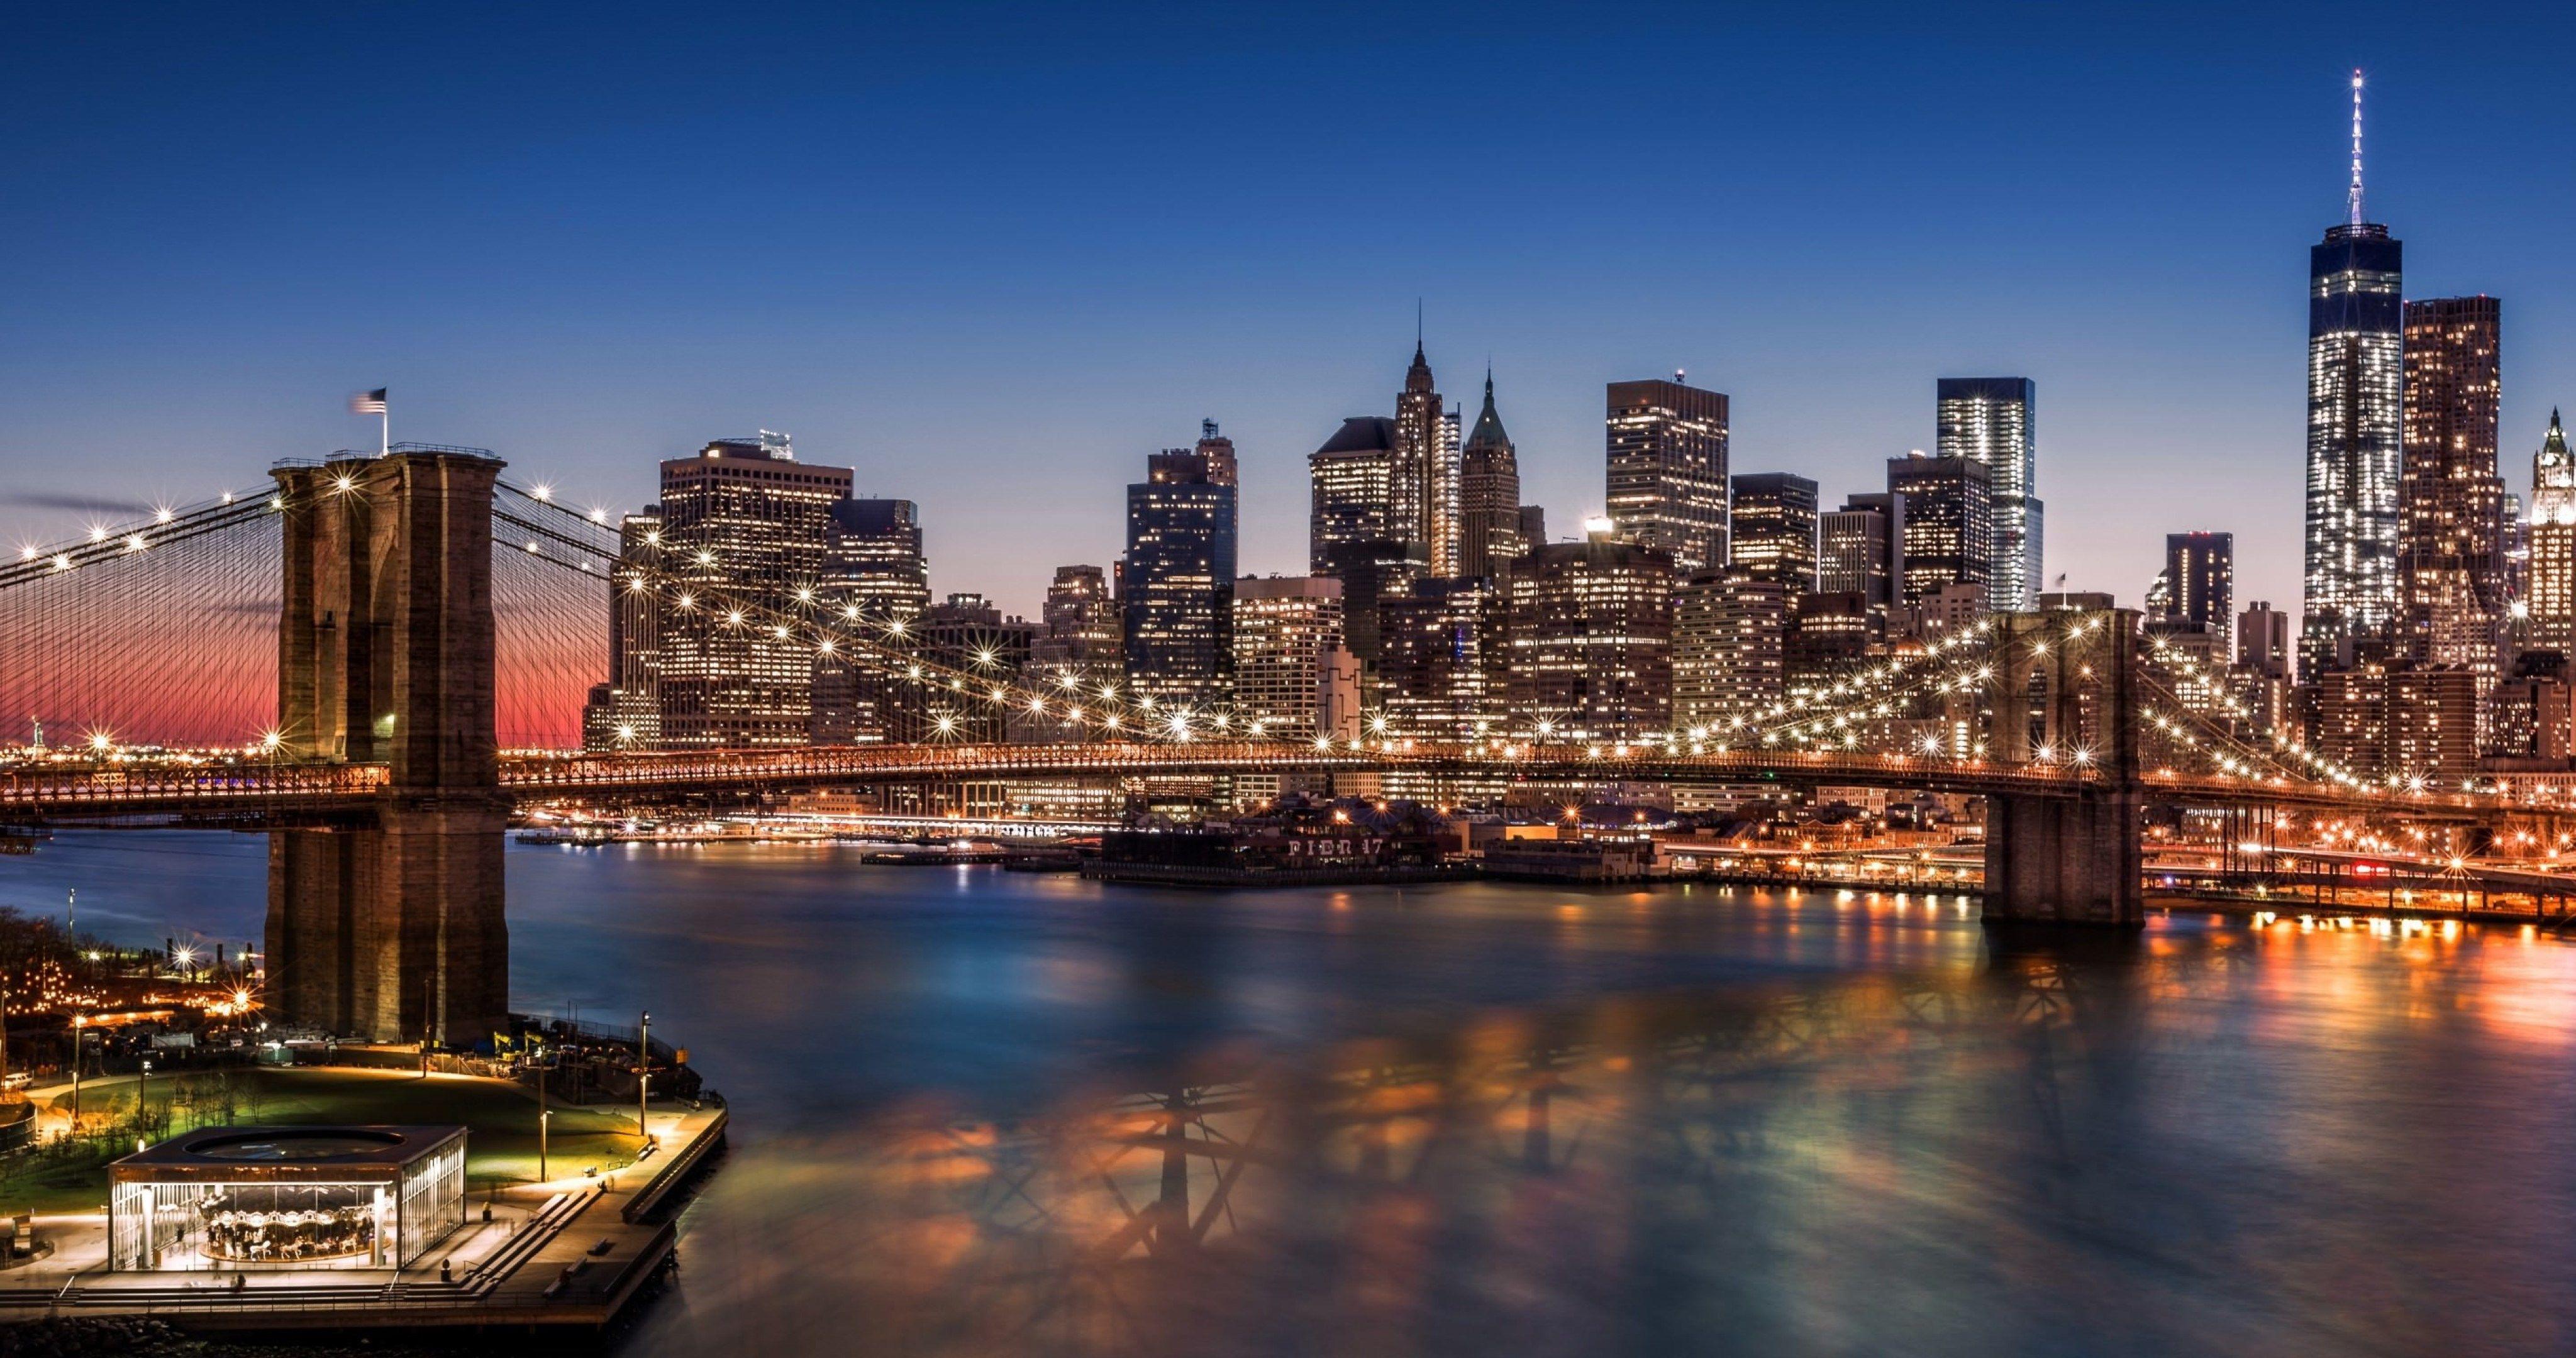 New York City 4K Ultra HD Wallpapers - Top Free New York ...